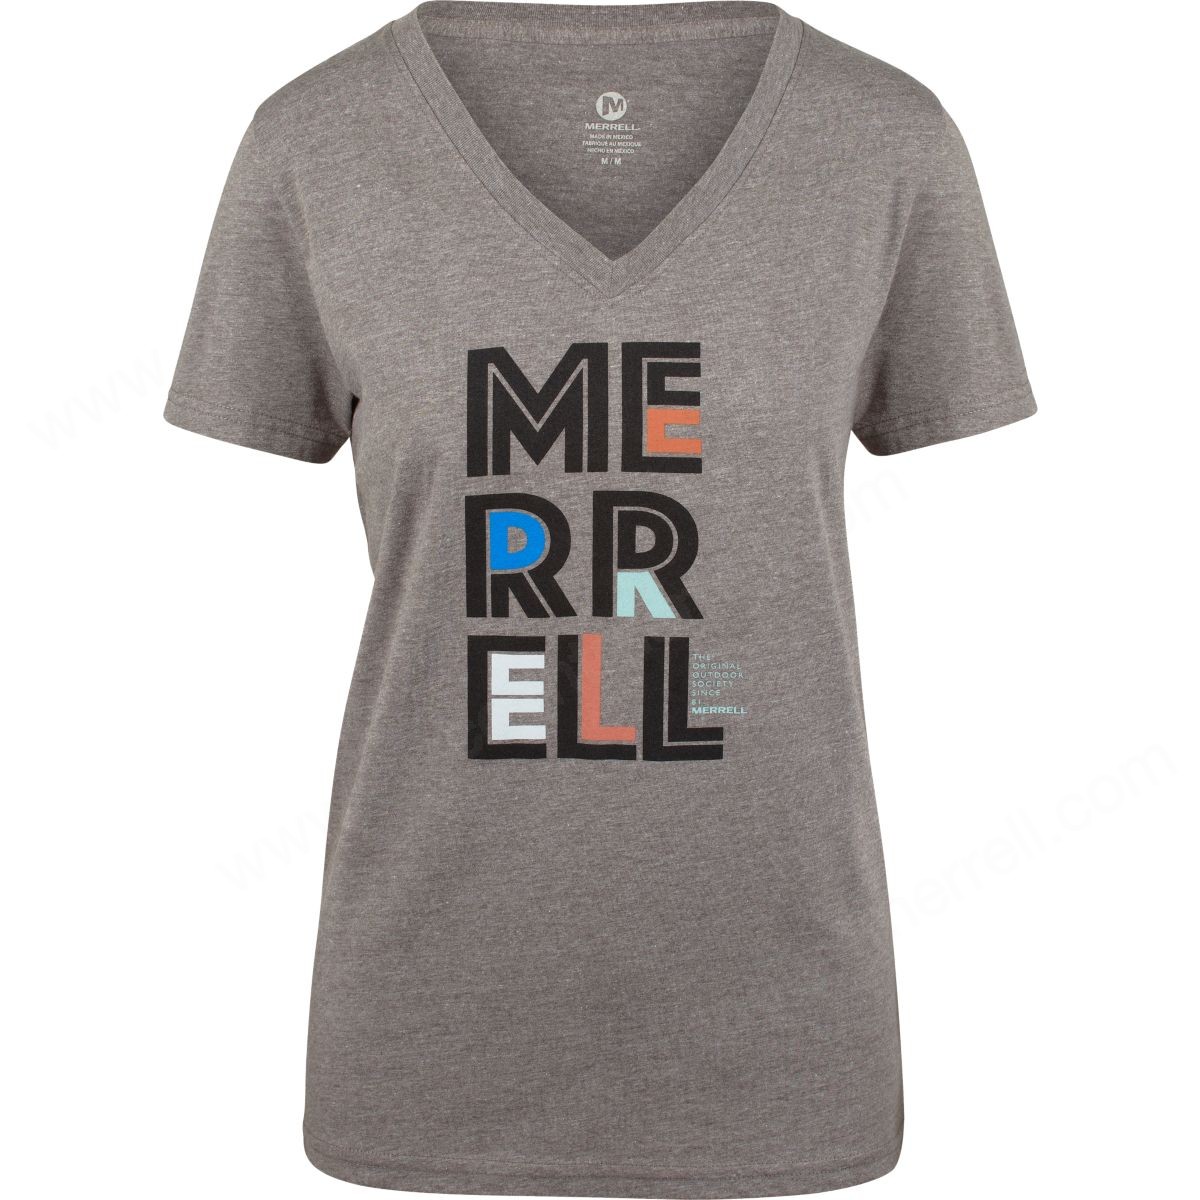 Merrell Women's Palmer T-Shirts Grey Heather/black - Merrell Women's Palmer T-Shirts Grey Heather/black